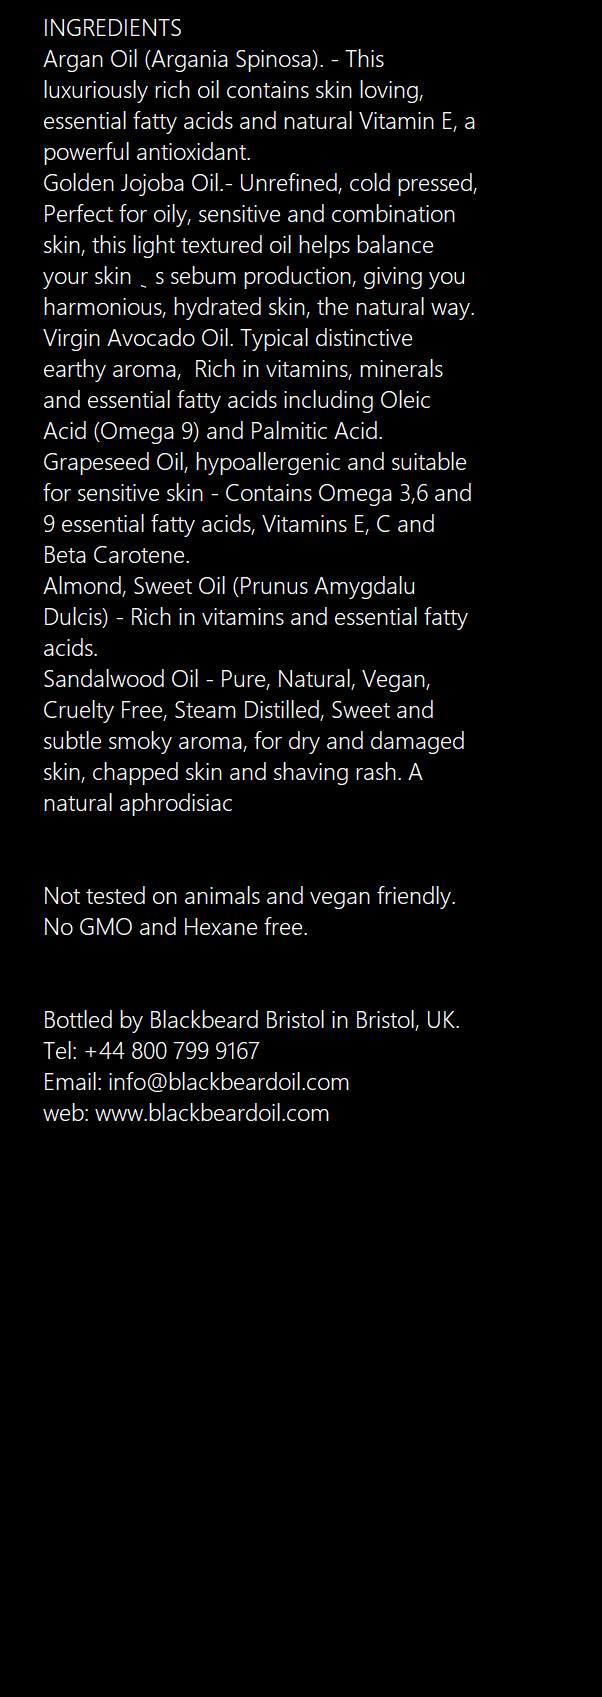 BlackBeard Oil Bristol